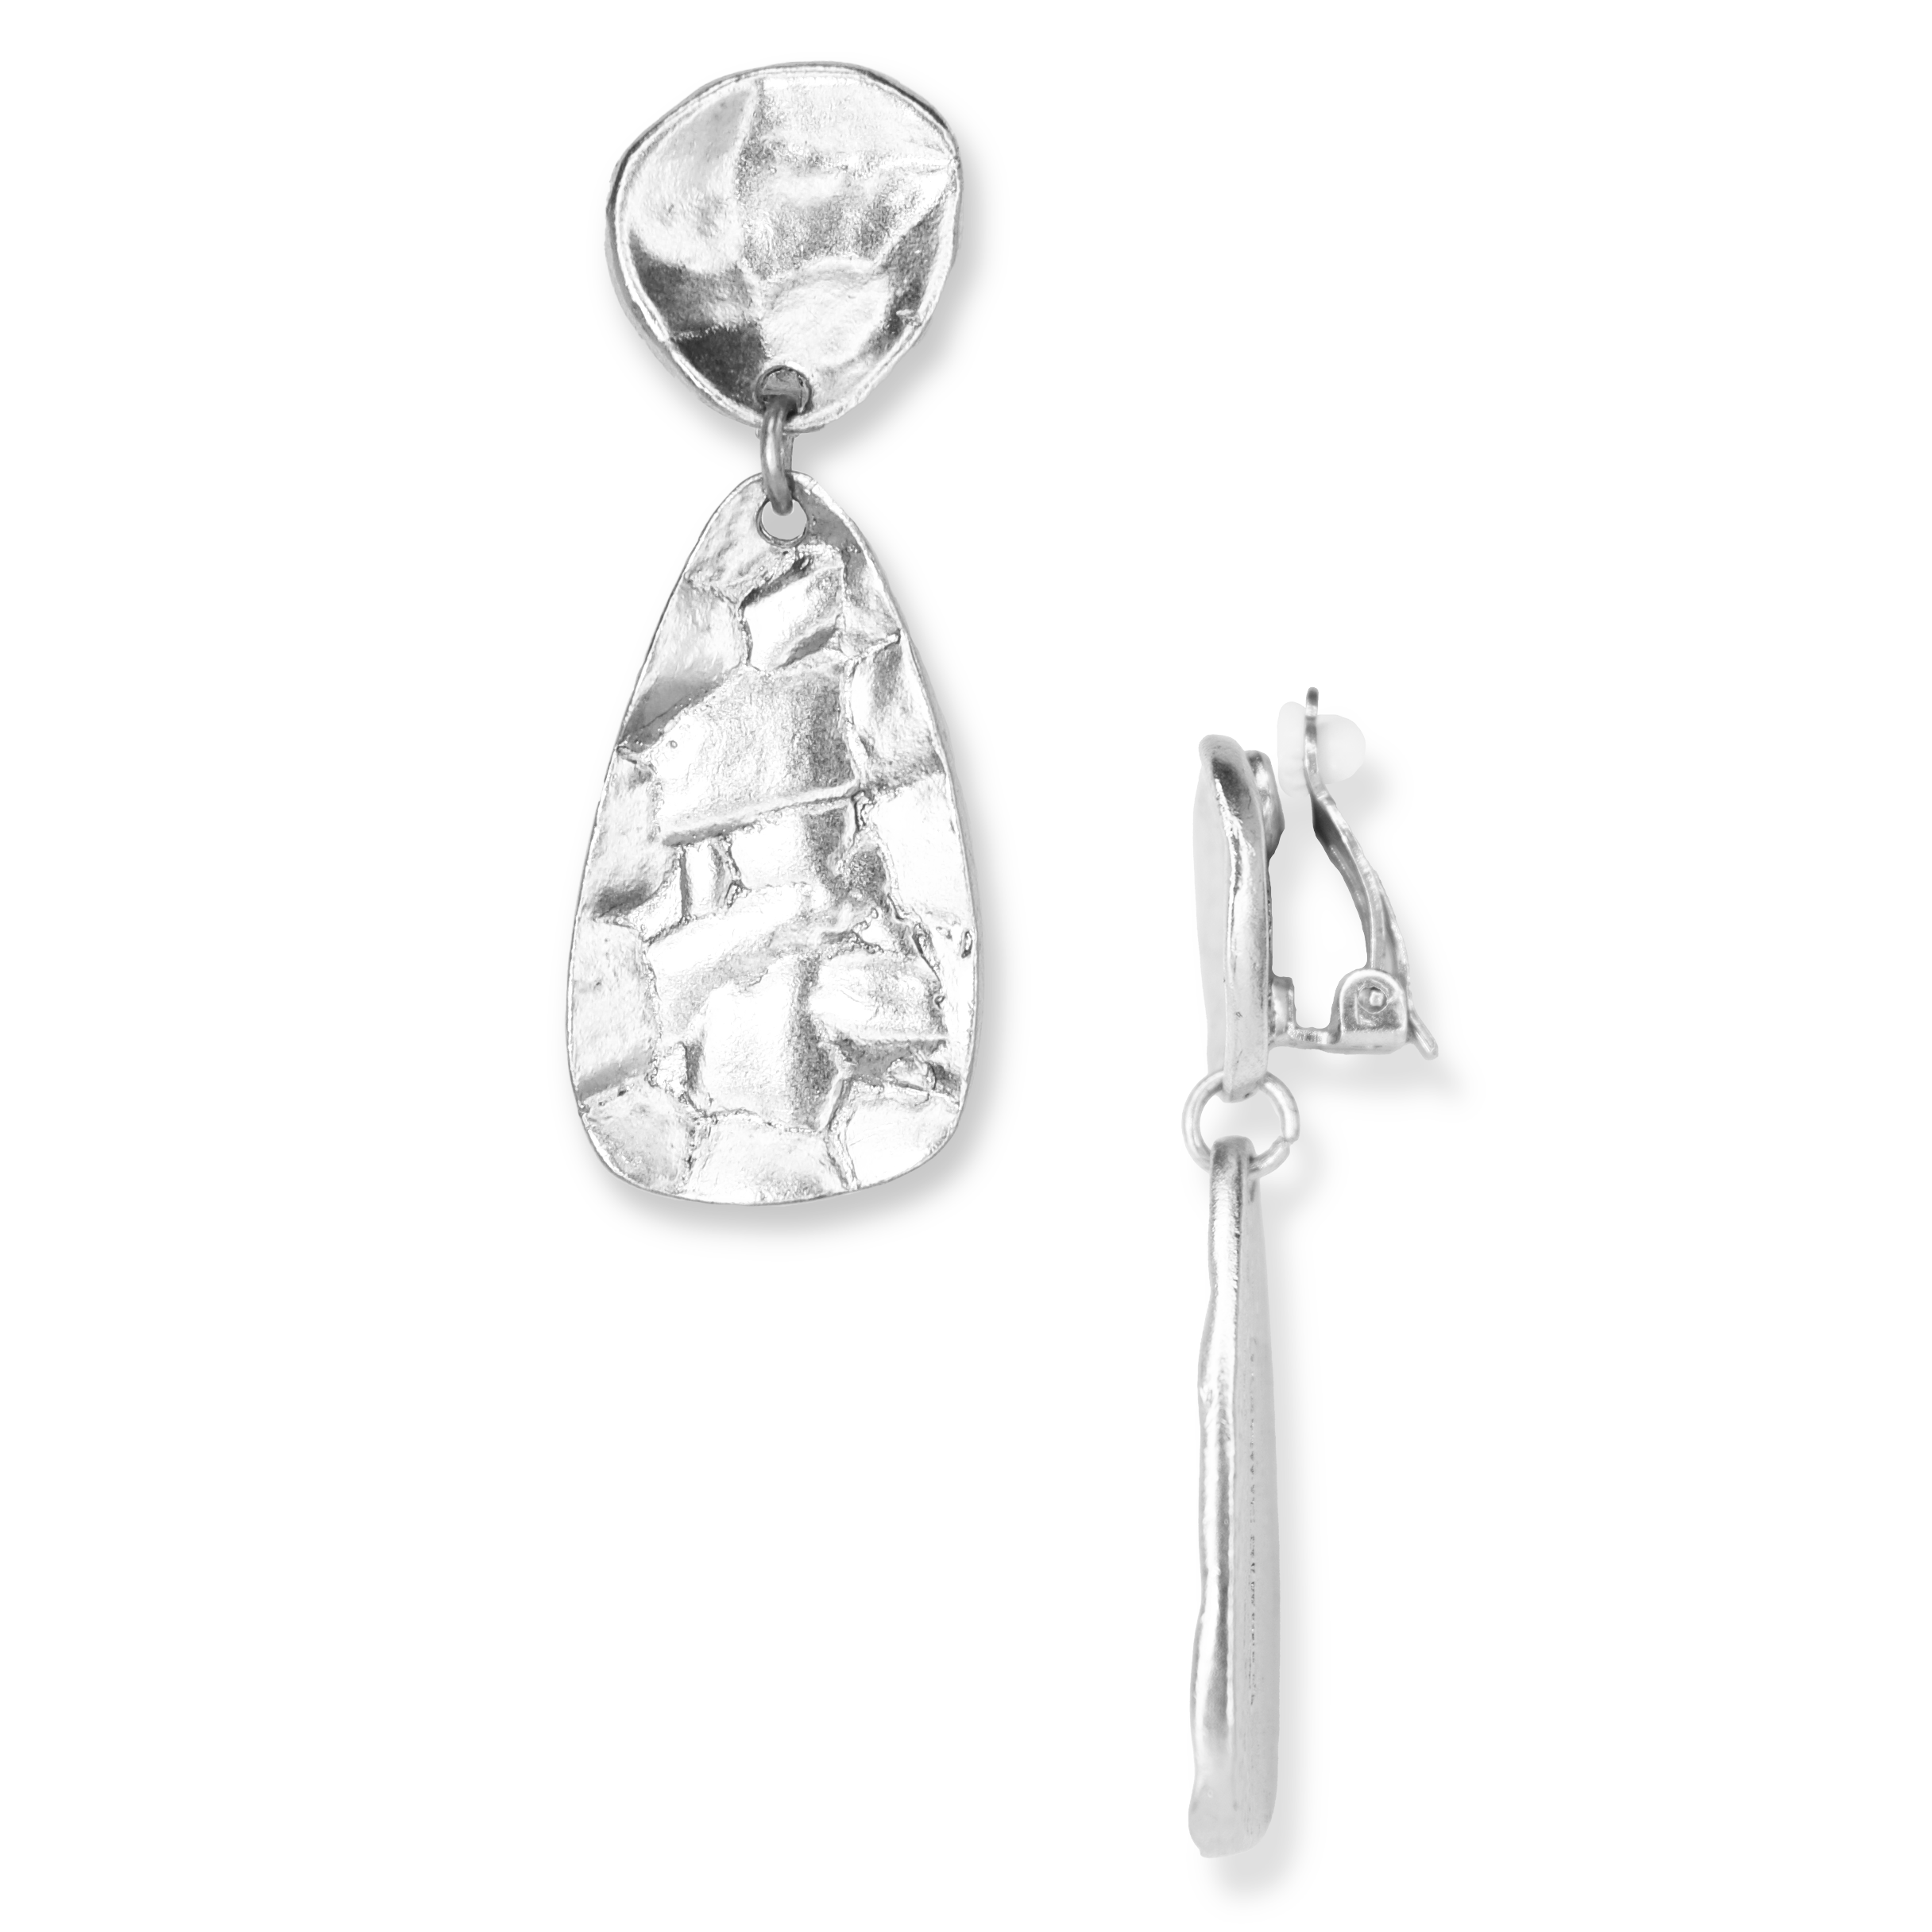 Organically shaped dangle clip-on earrings